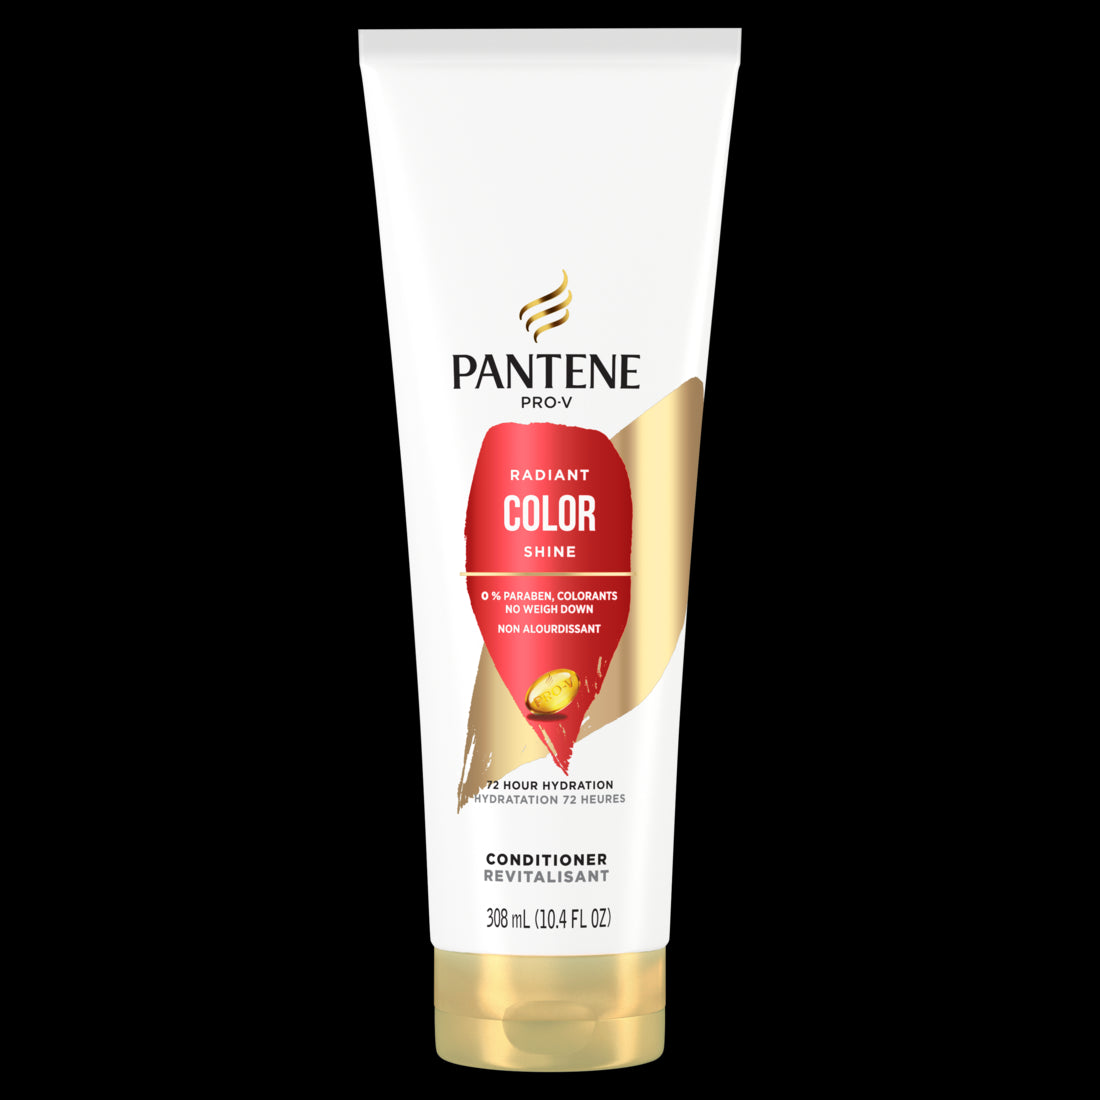 Pantene PRO-V Radiant Color Shine Conditioner - 10.4oz/12pk